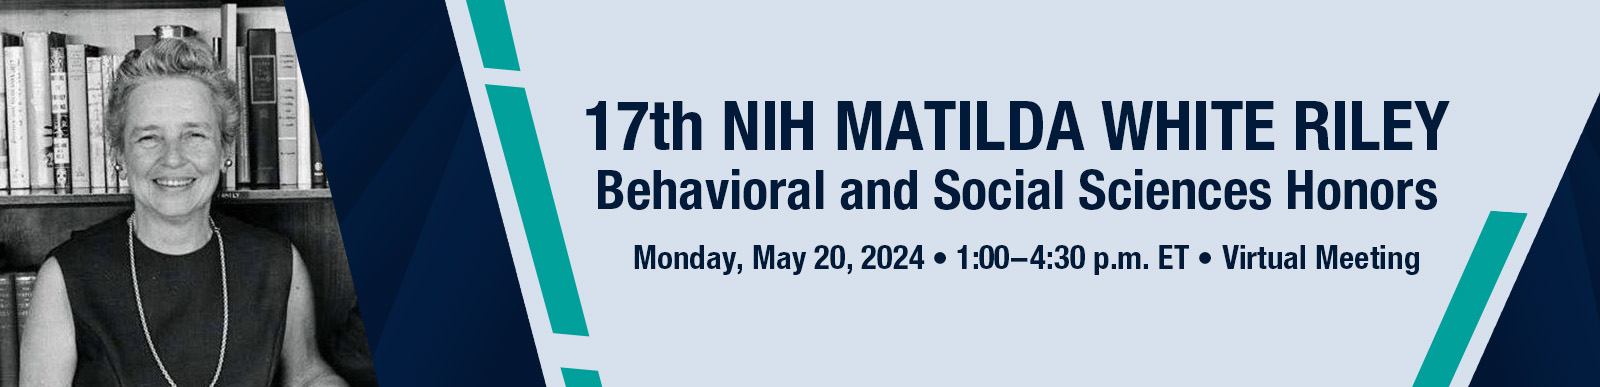 17th NIH Matilda White Riley Behavioral and Social Science Honors, Monday May 20, 2024, 1-4:30pm, Virtual Meeting